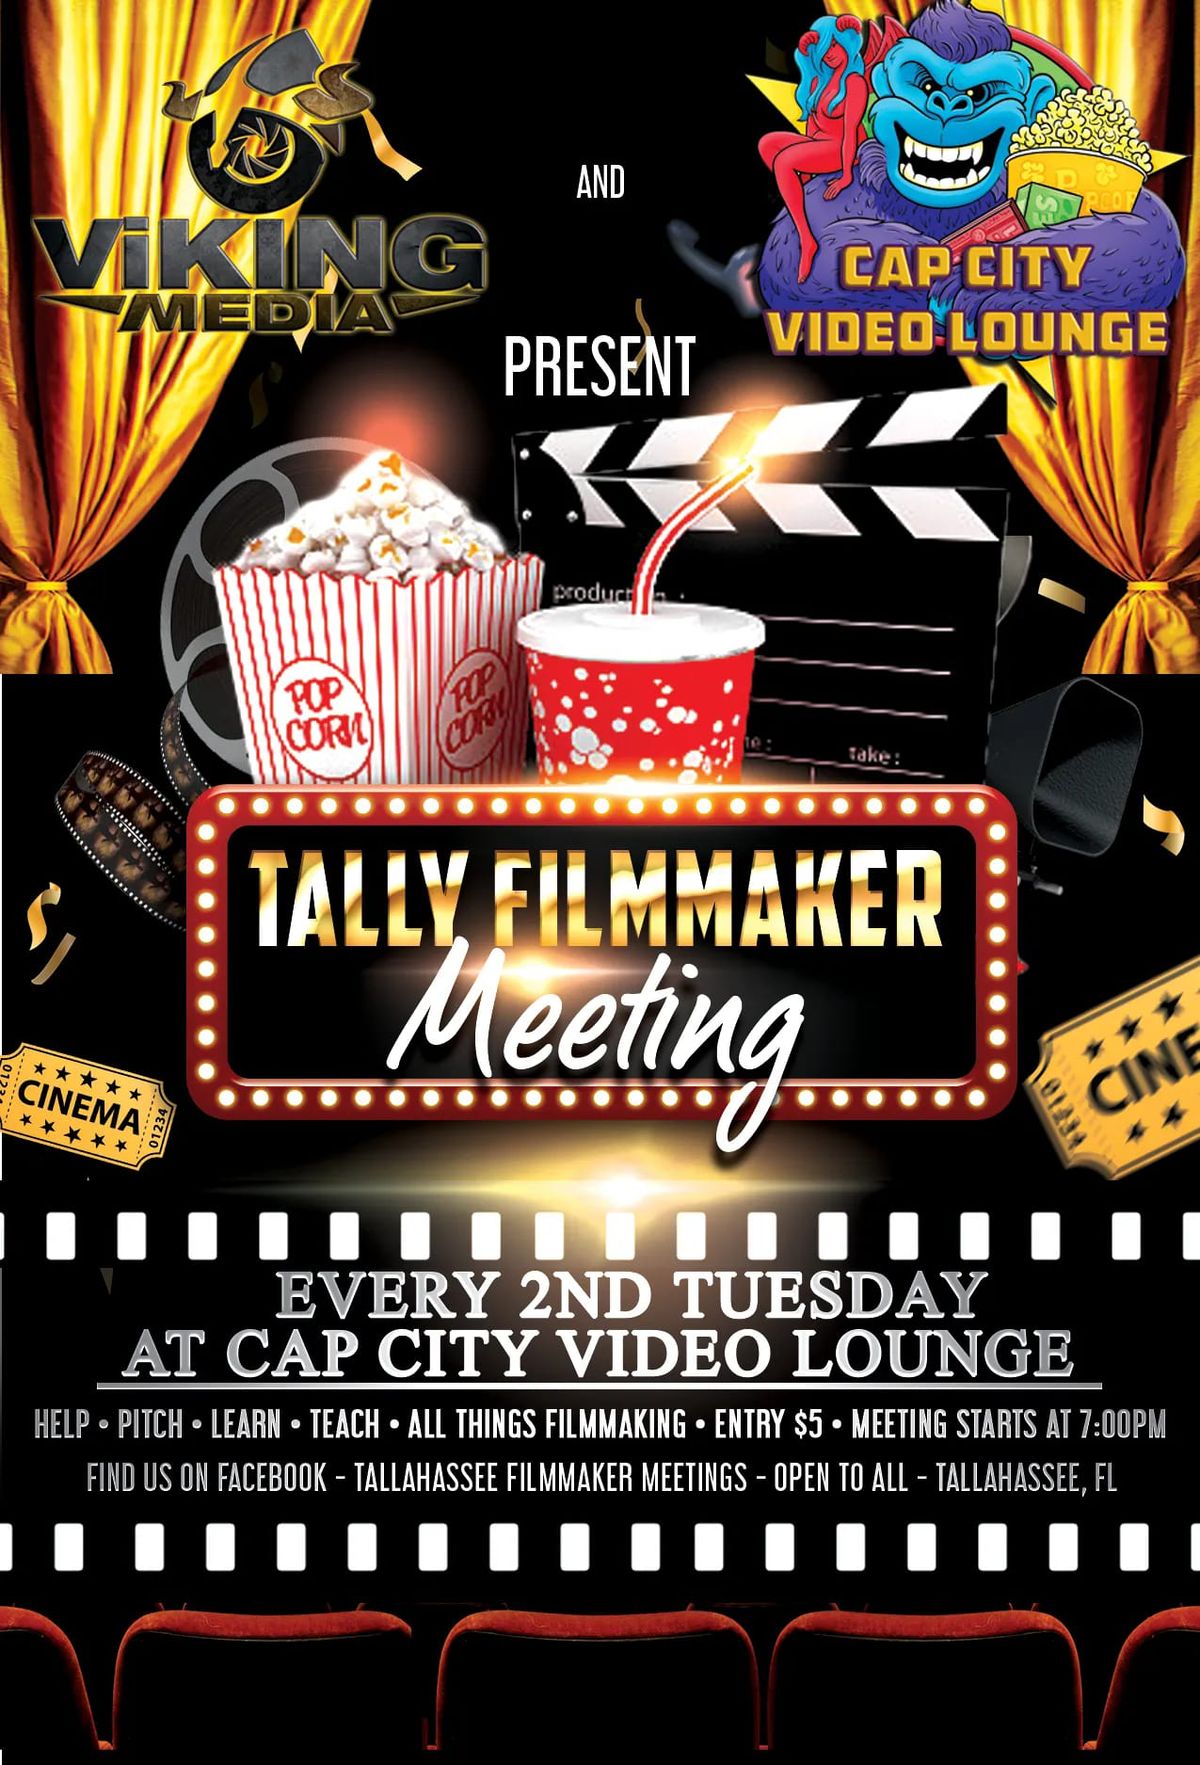 Tallahassee Filmmaker Meeting @CCVL (June Social)